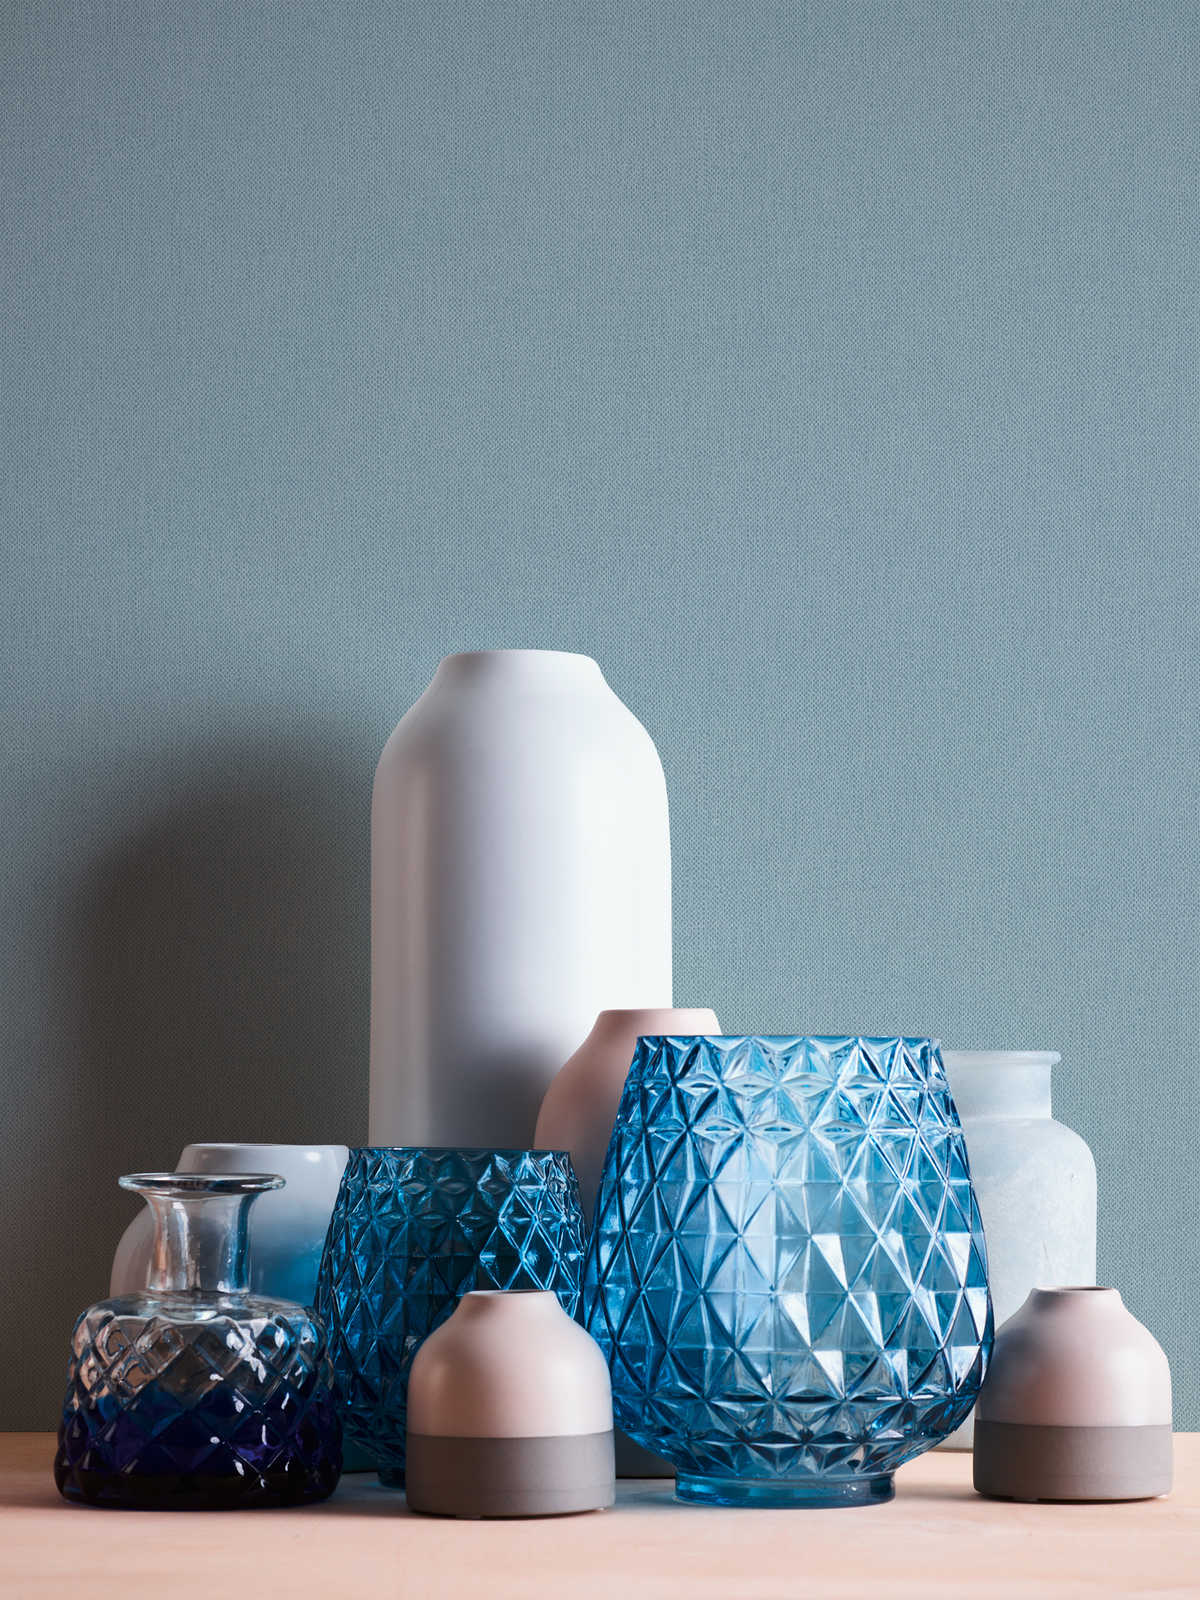             Tapete Blaugrau mit Gewebestruktur & matter Farbe – Blau
        